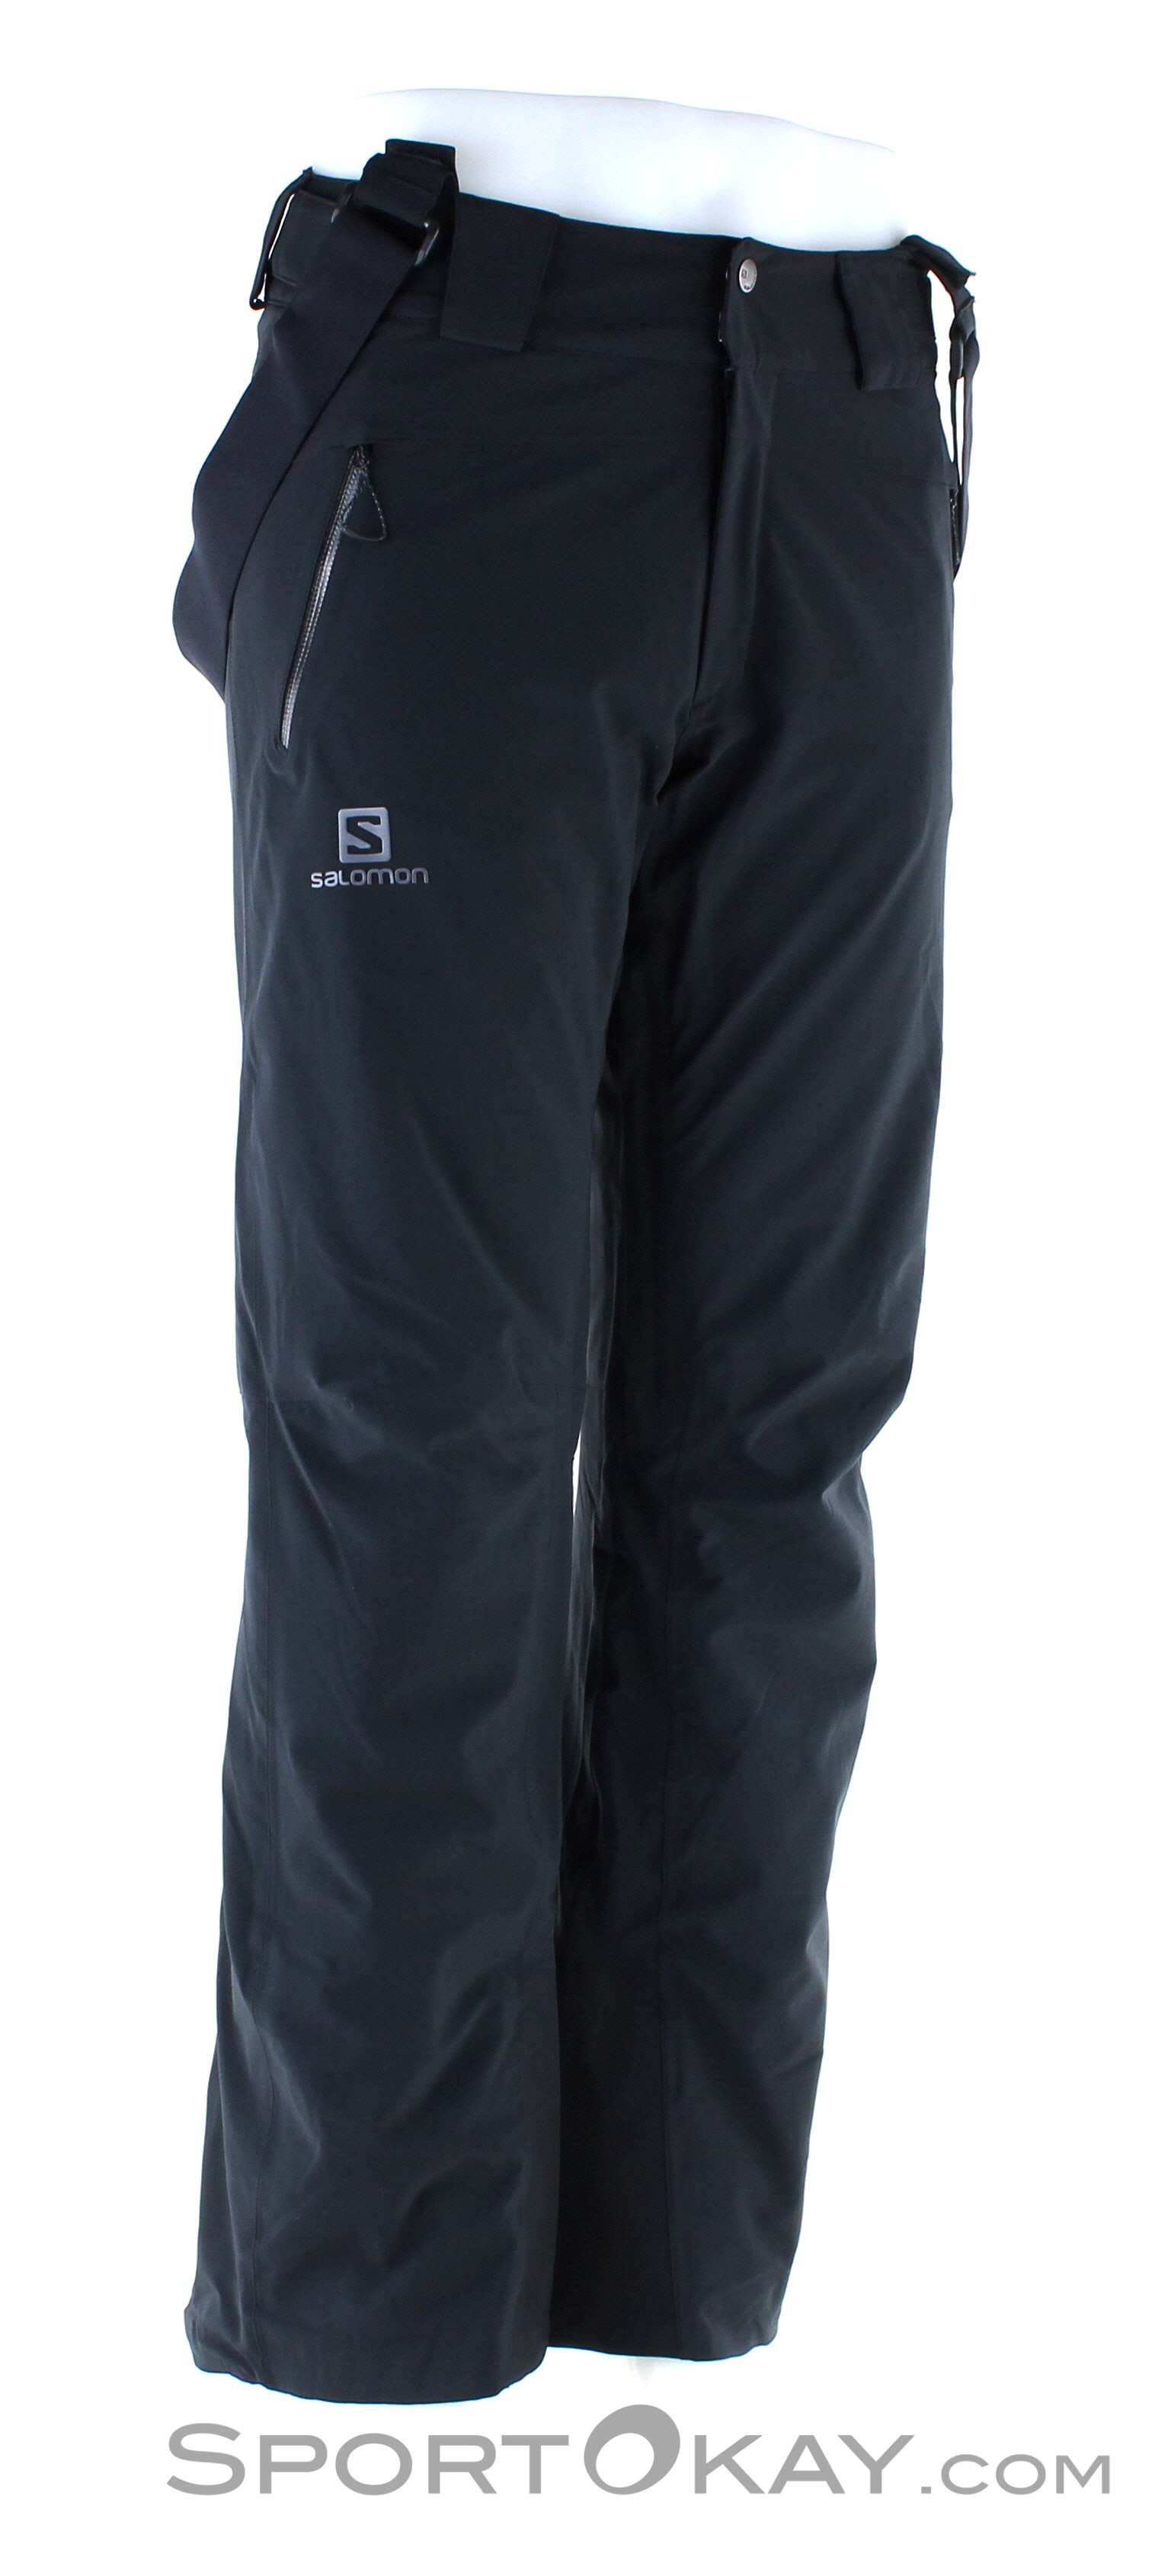 Salomon Iceglory Pant Men's Ski Snowboard Waterproof Snow Trousers New 